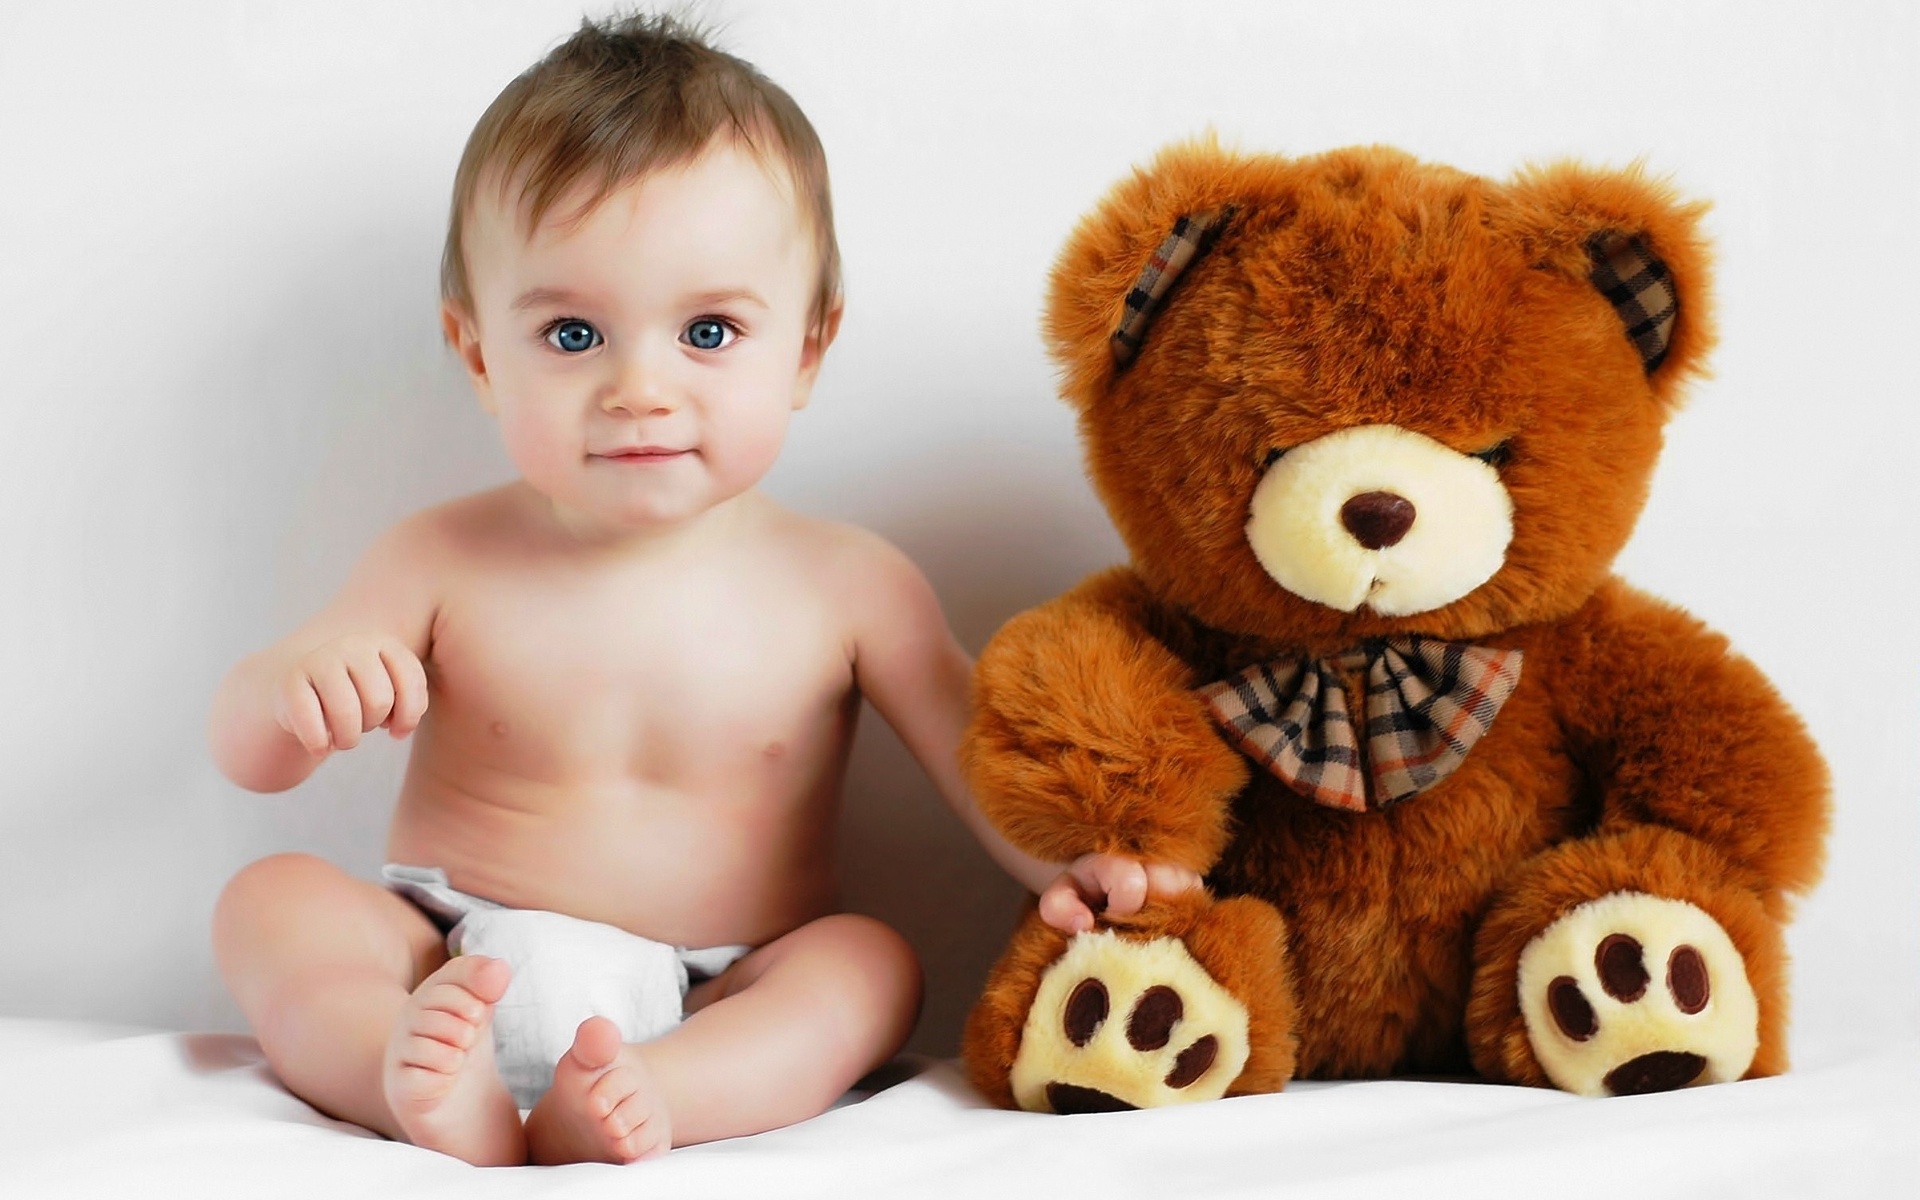 248105 Bild herunterladen fotografie, baby, bär, kind, süß, teddybär - Hintergrundbilder und Bildschirmschoner kostenlos